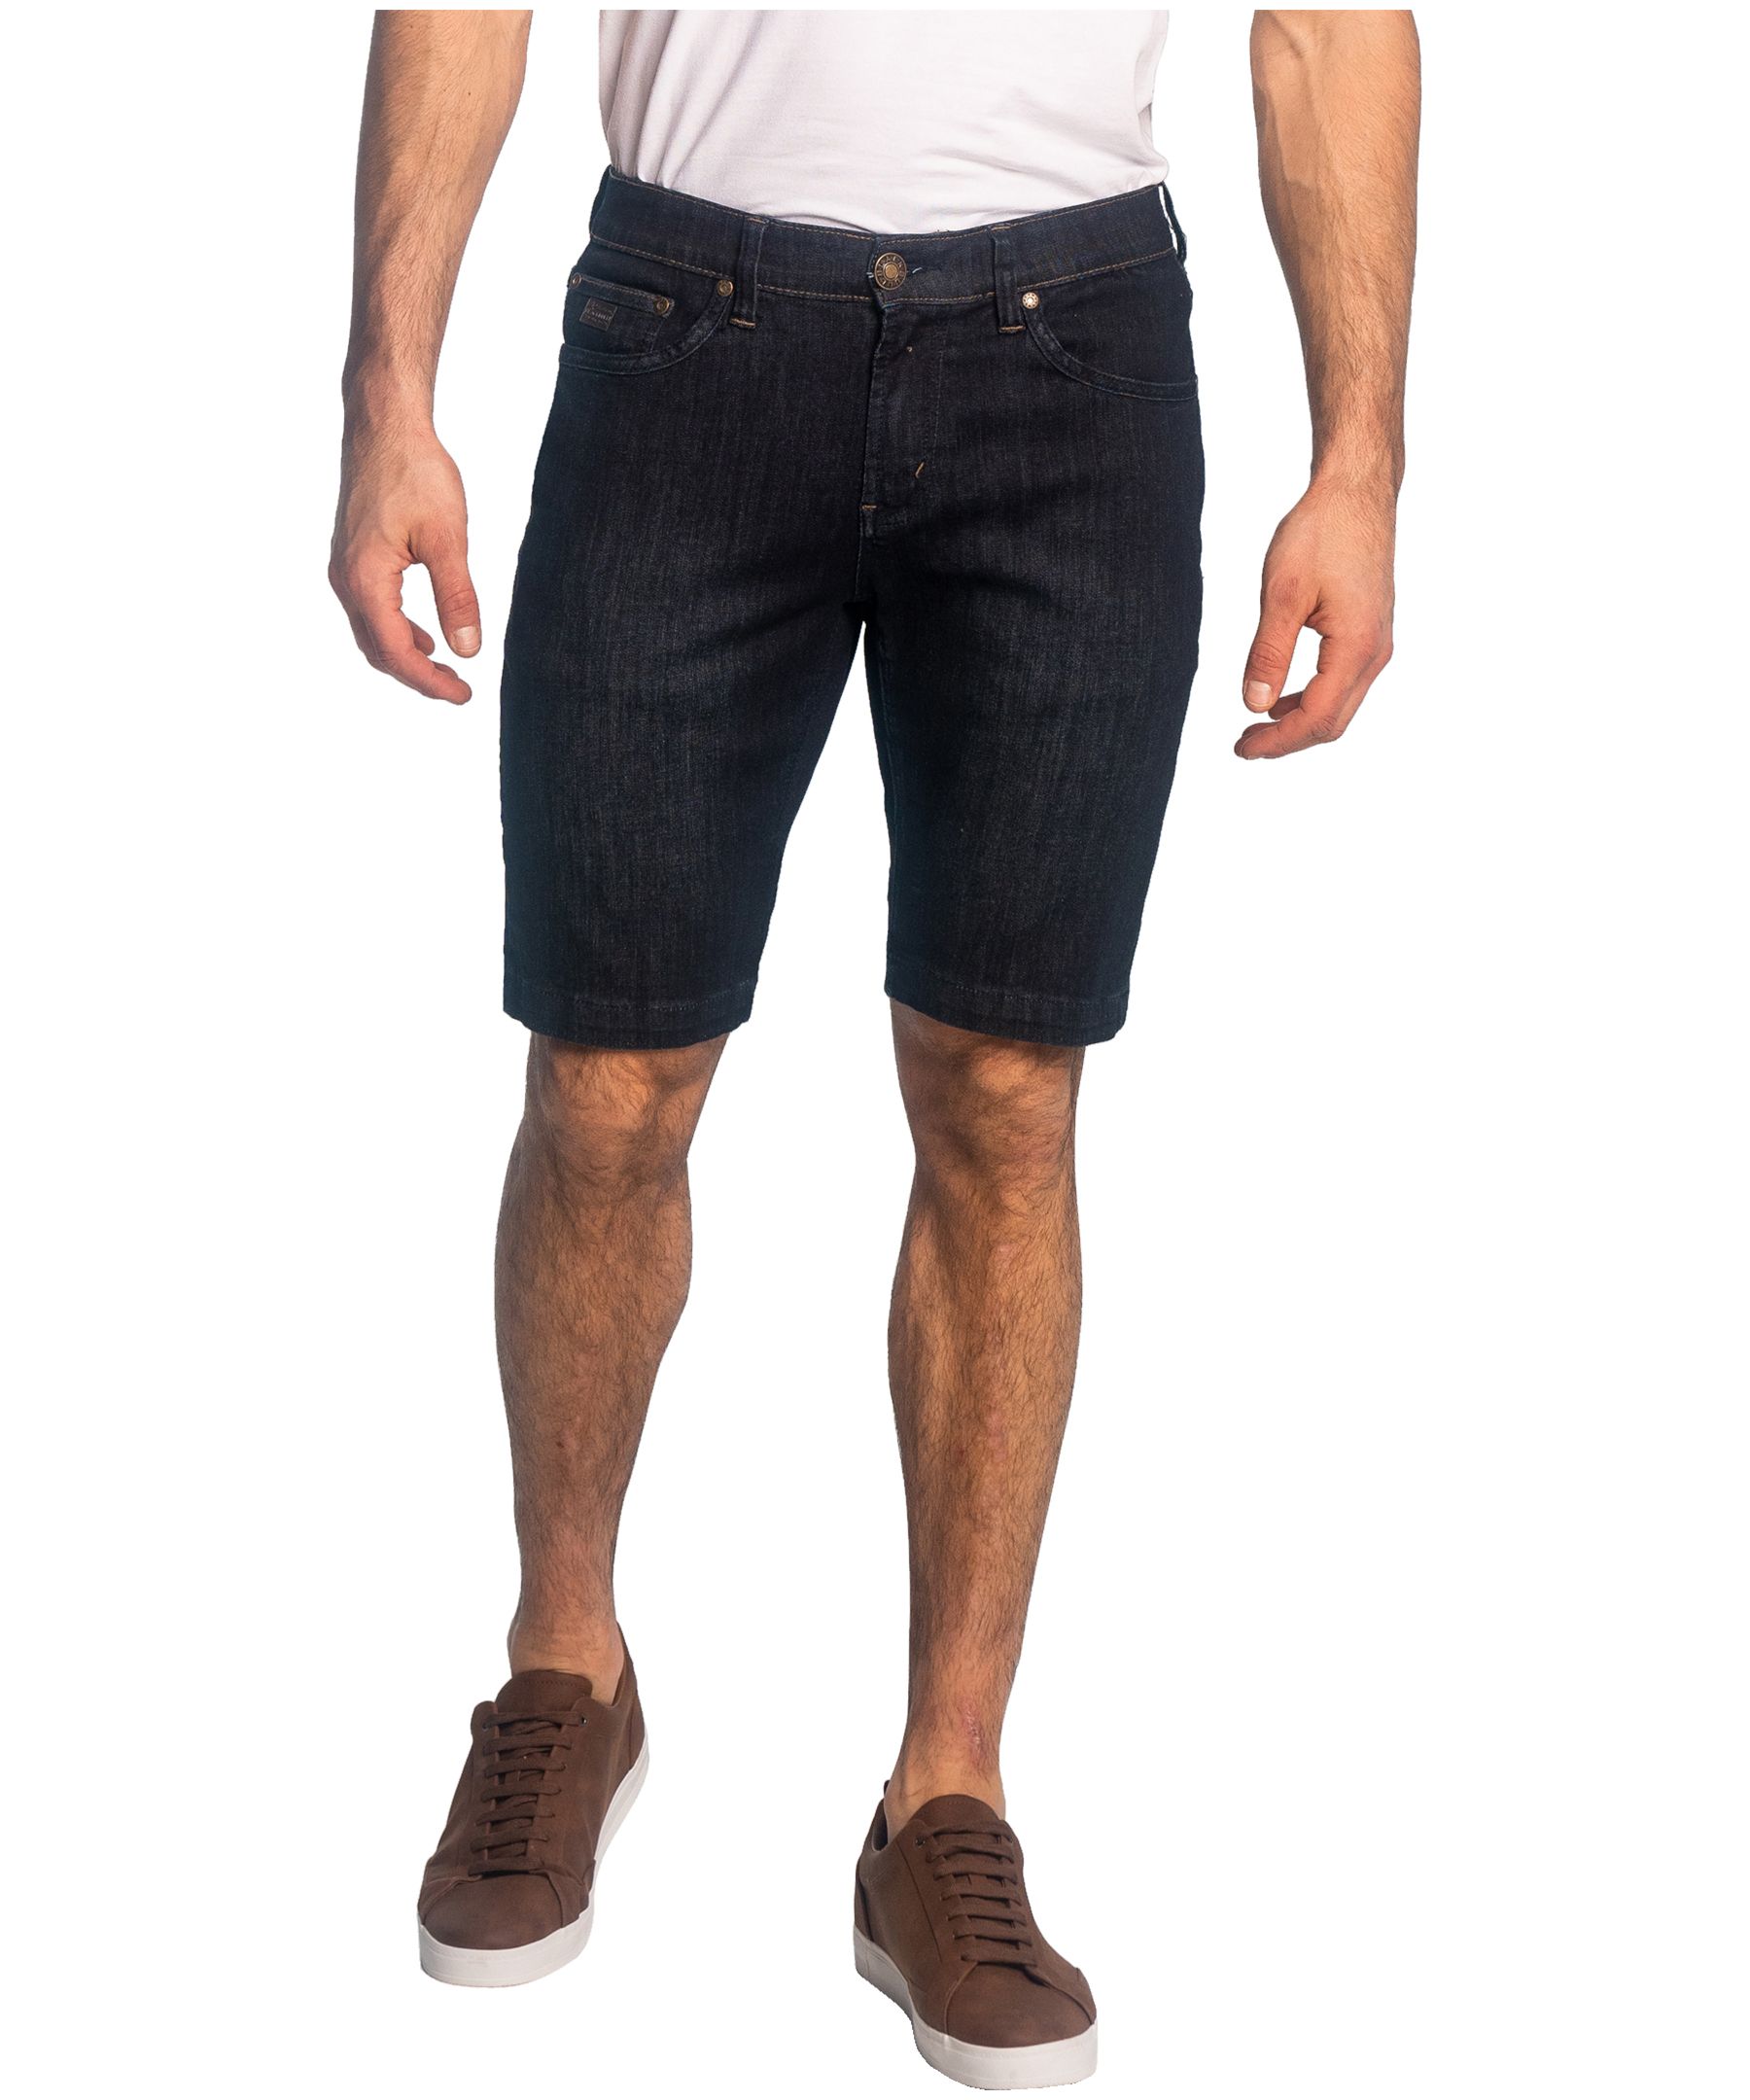 Men's John Low Rise Slim Fit 10.5 Inch Jean Shorts - Rinse | Marks